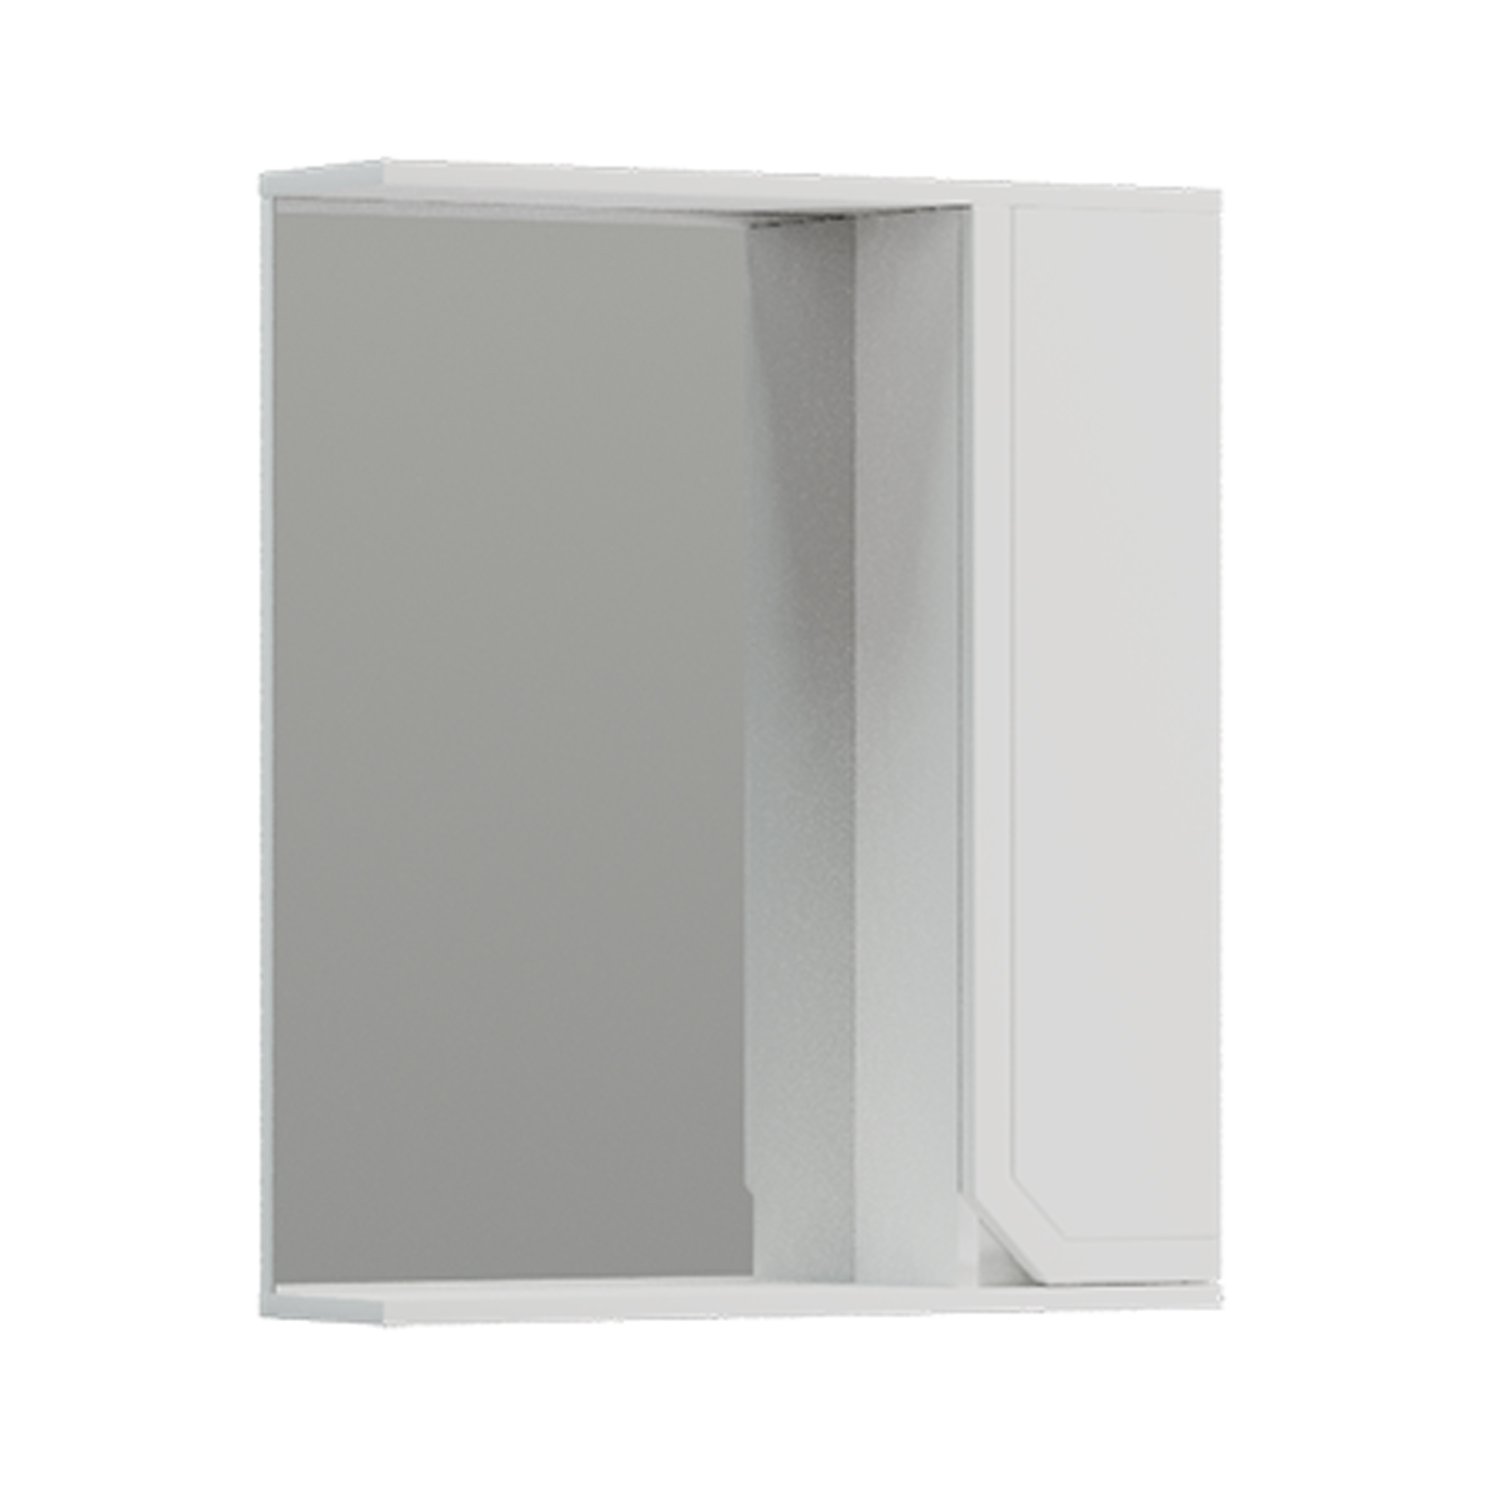 Шкаф-зеркало Corozo Сириус 65, правый, цвет белый - фото 1